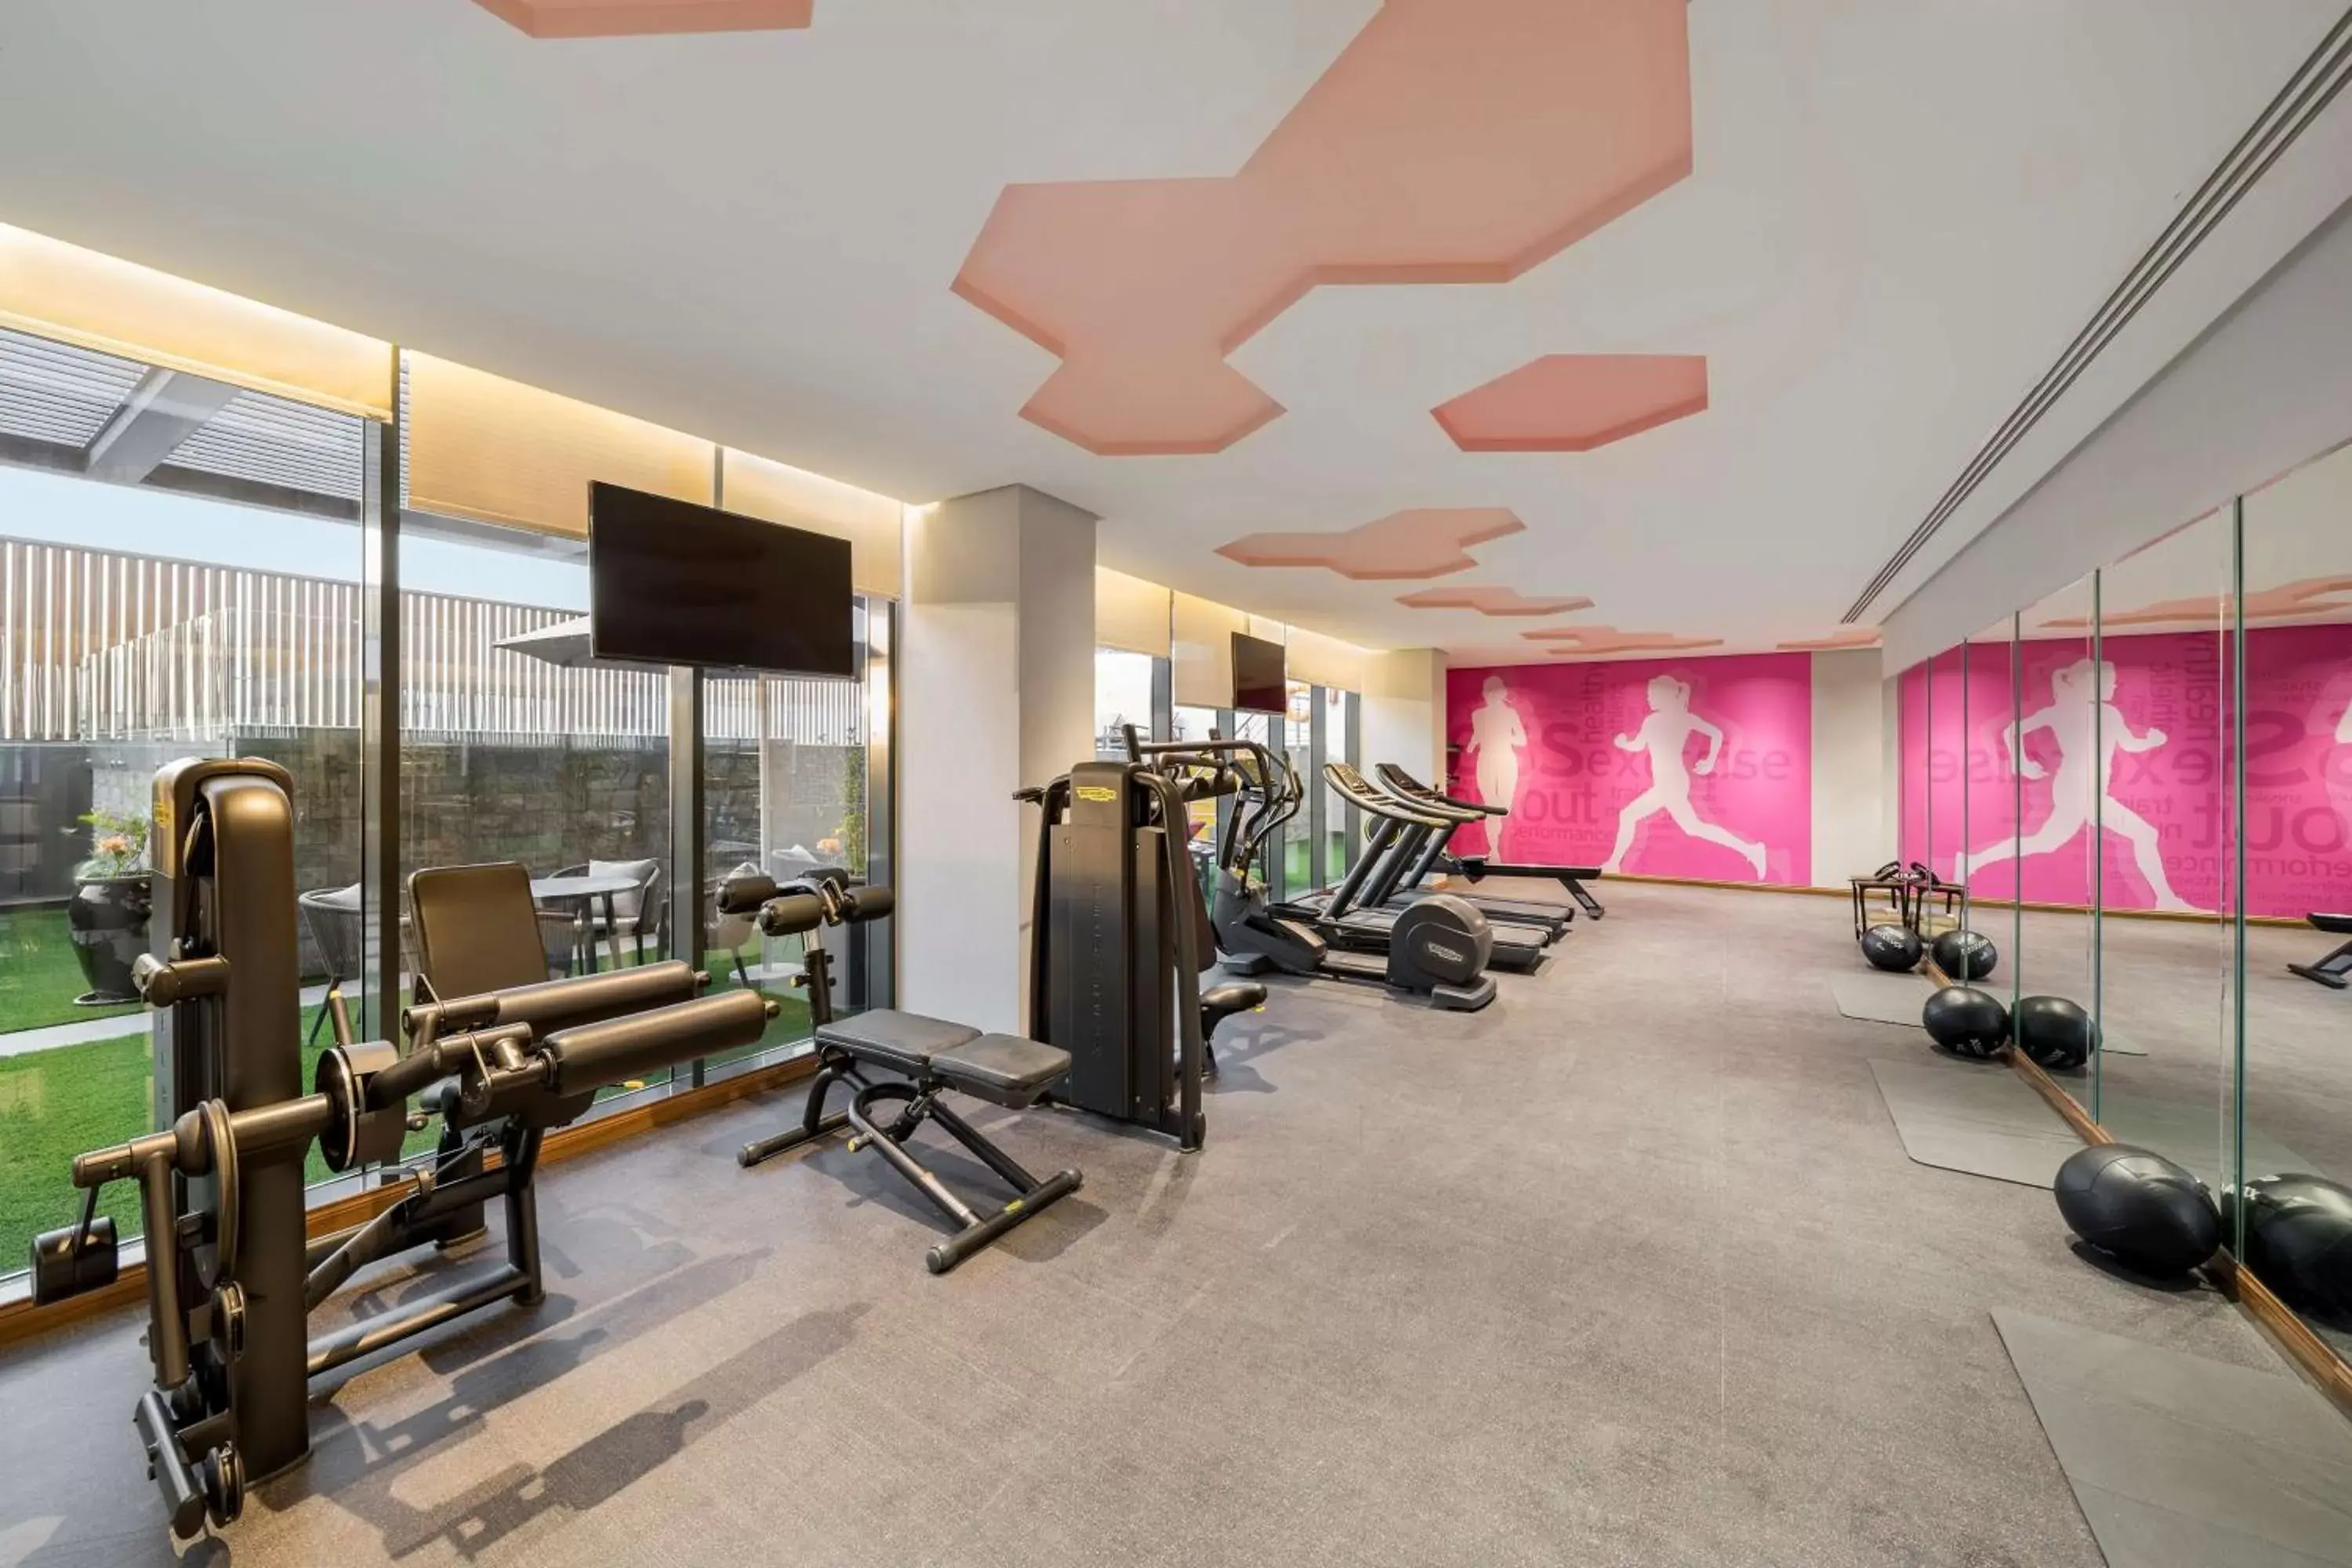 Fitness centre/facilities, Fitness Center/Facilities in Radisson Blu Hotel Riyadh Qurtuba